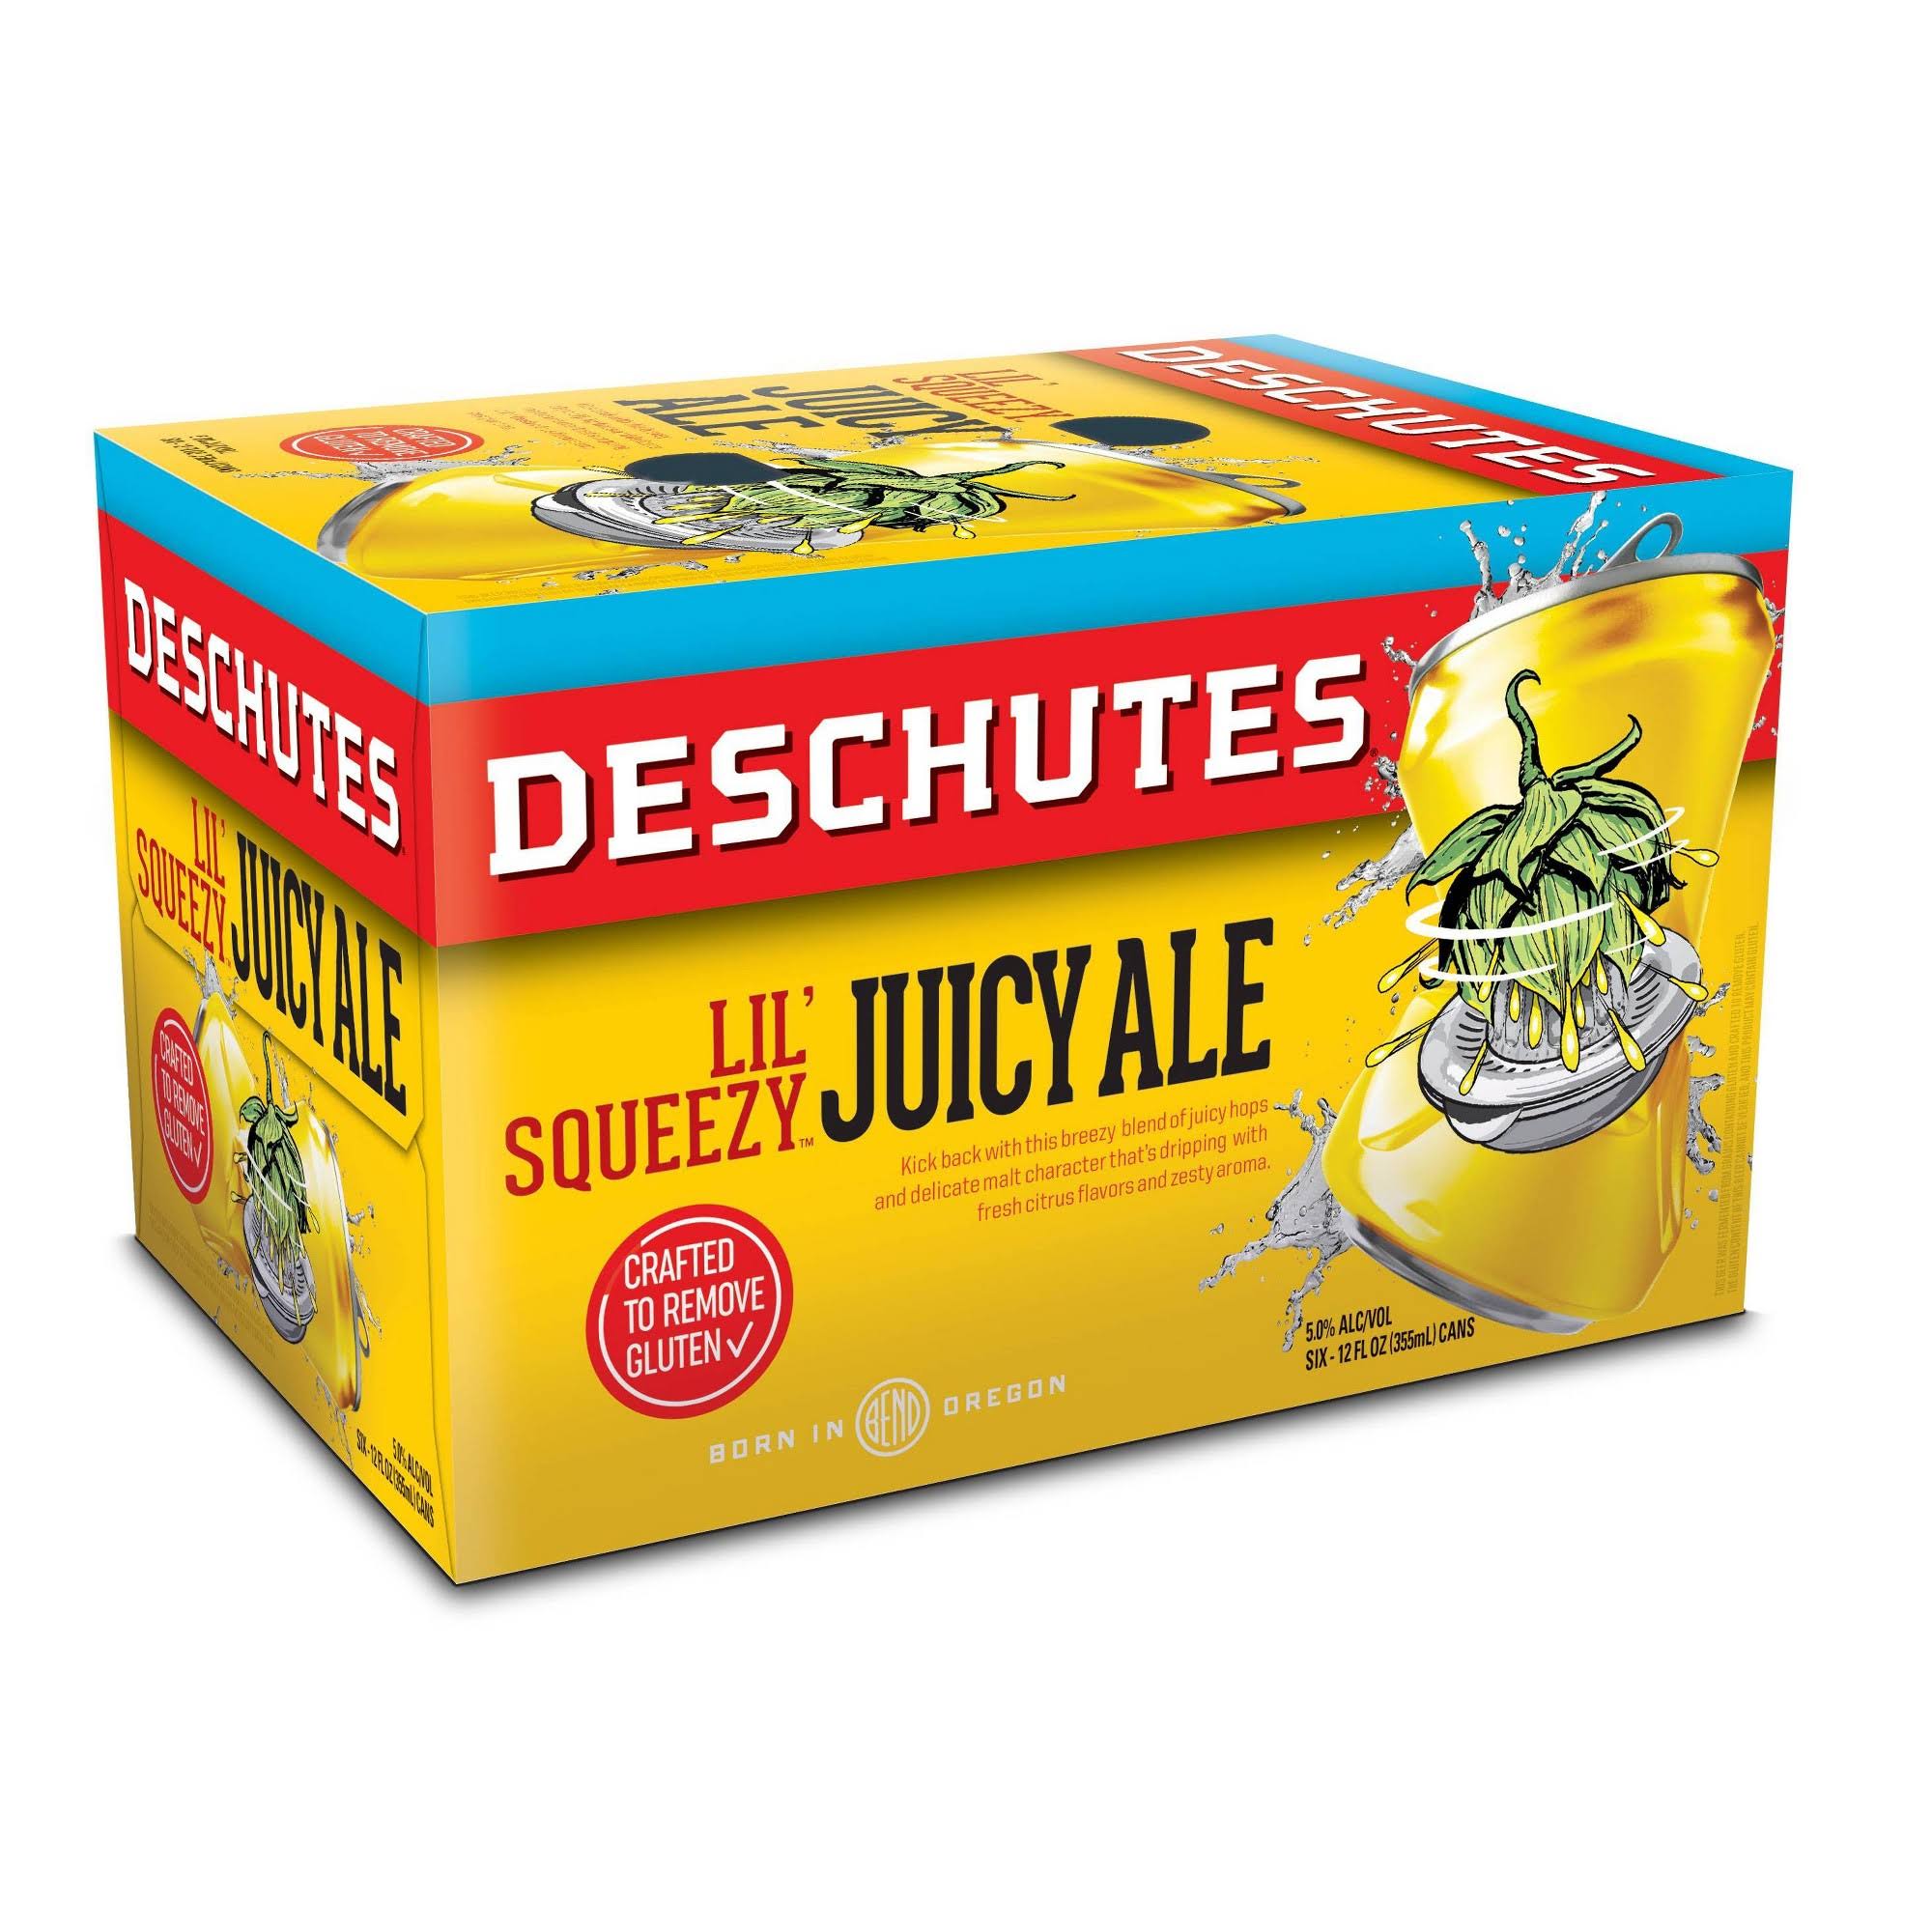 Deschutes Beer, Juicy Pale, Lil' Squeezy - 6 pack, 12 fl oz cans